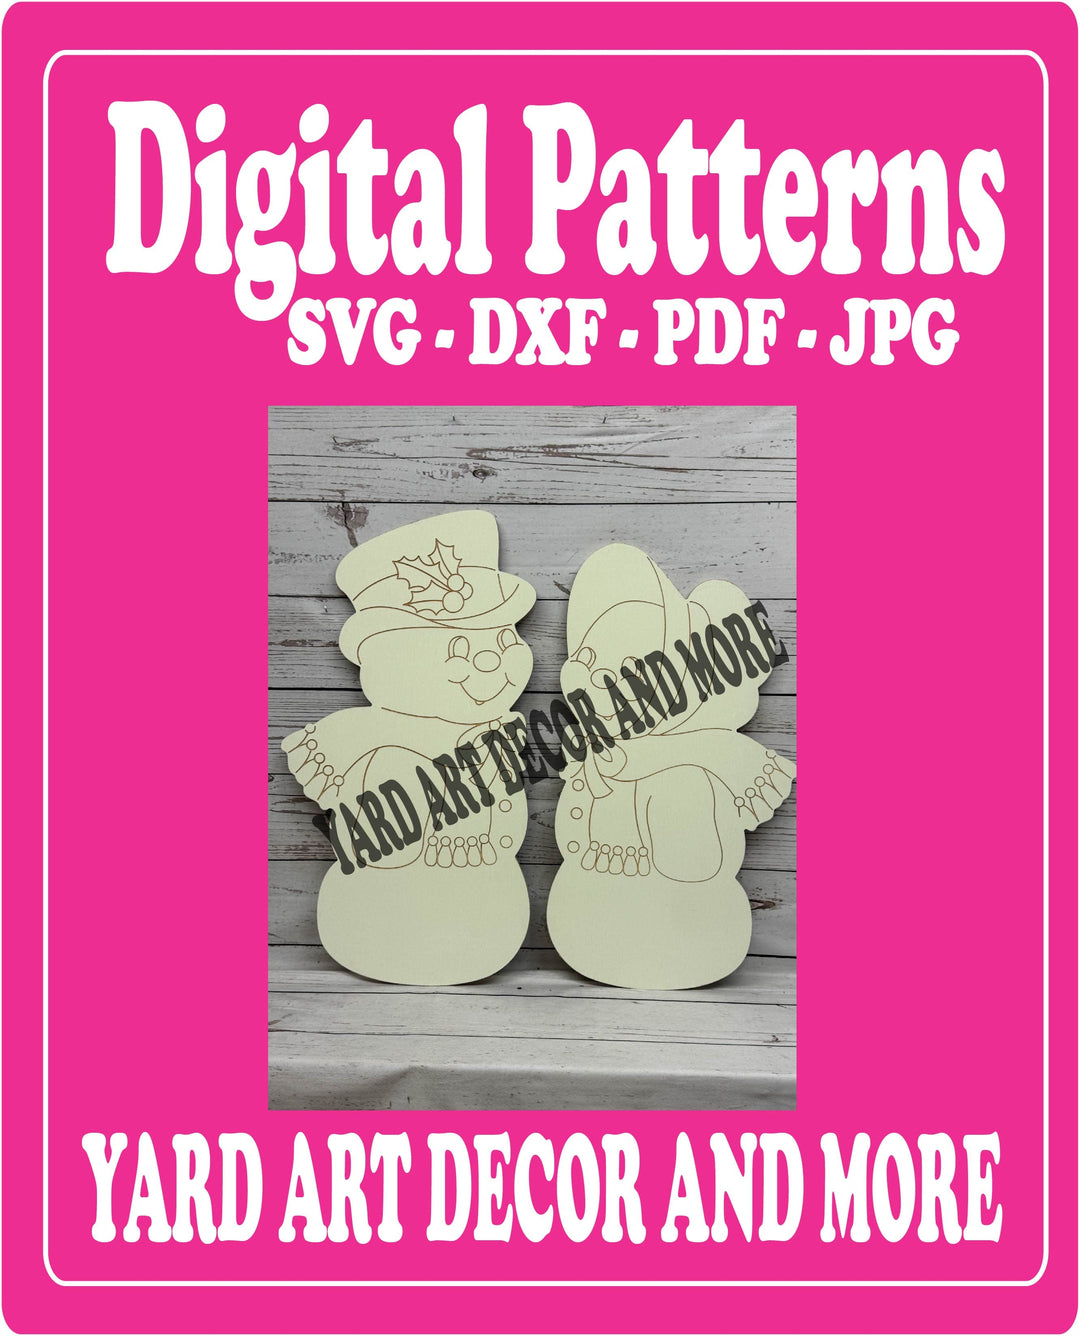 Christmas Snow Pa and Snow Ma Set Yard Art - SVG - DXF - PDF - JPG Files